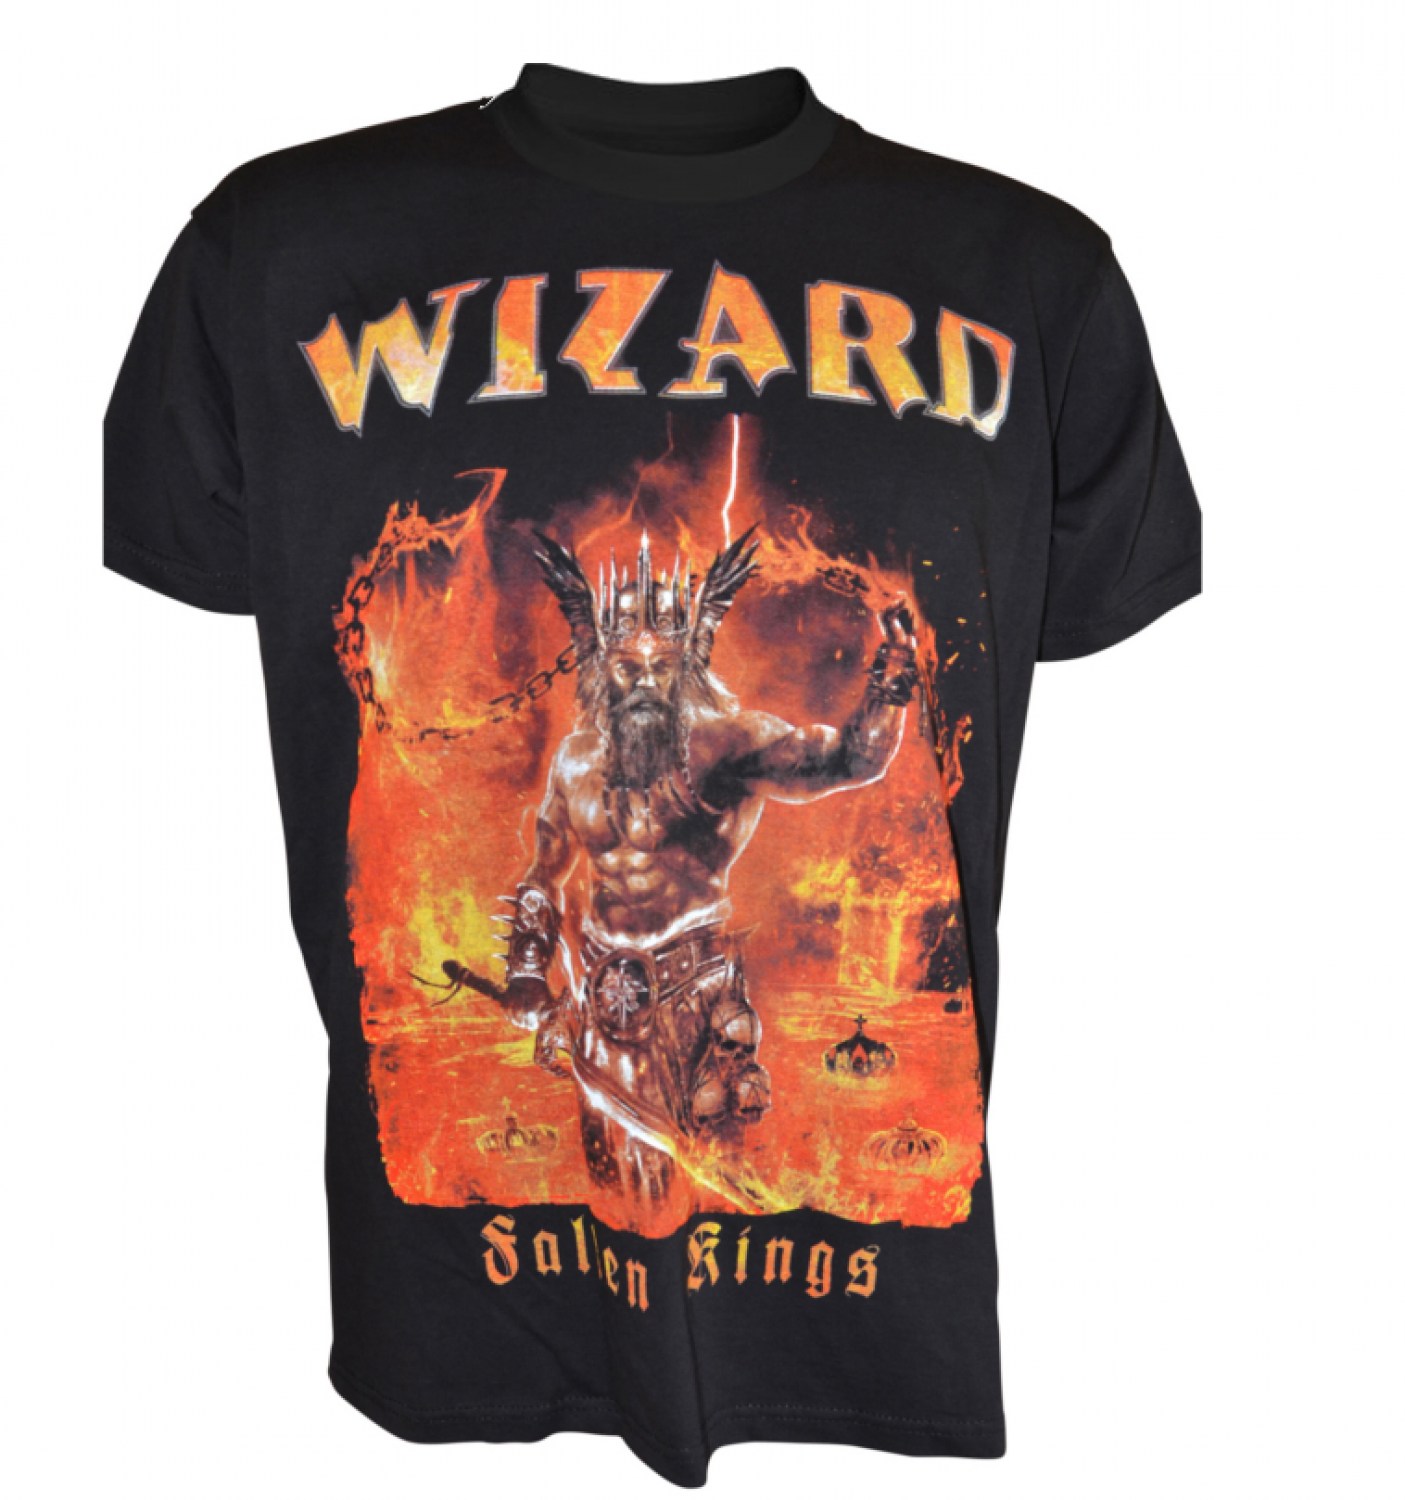 Wizard - Fallen Kings • T-Shirt